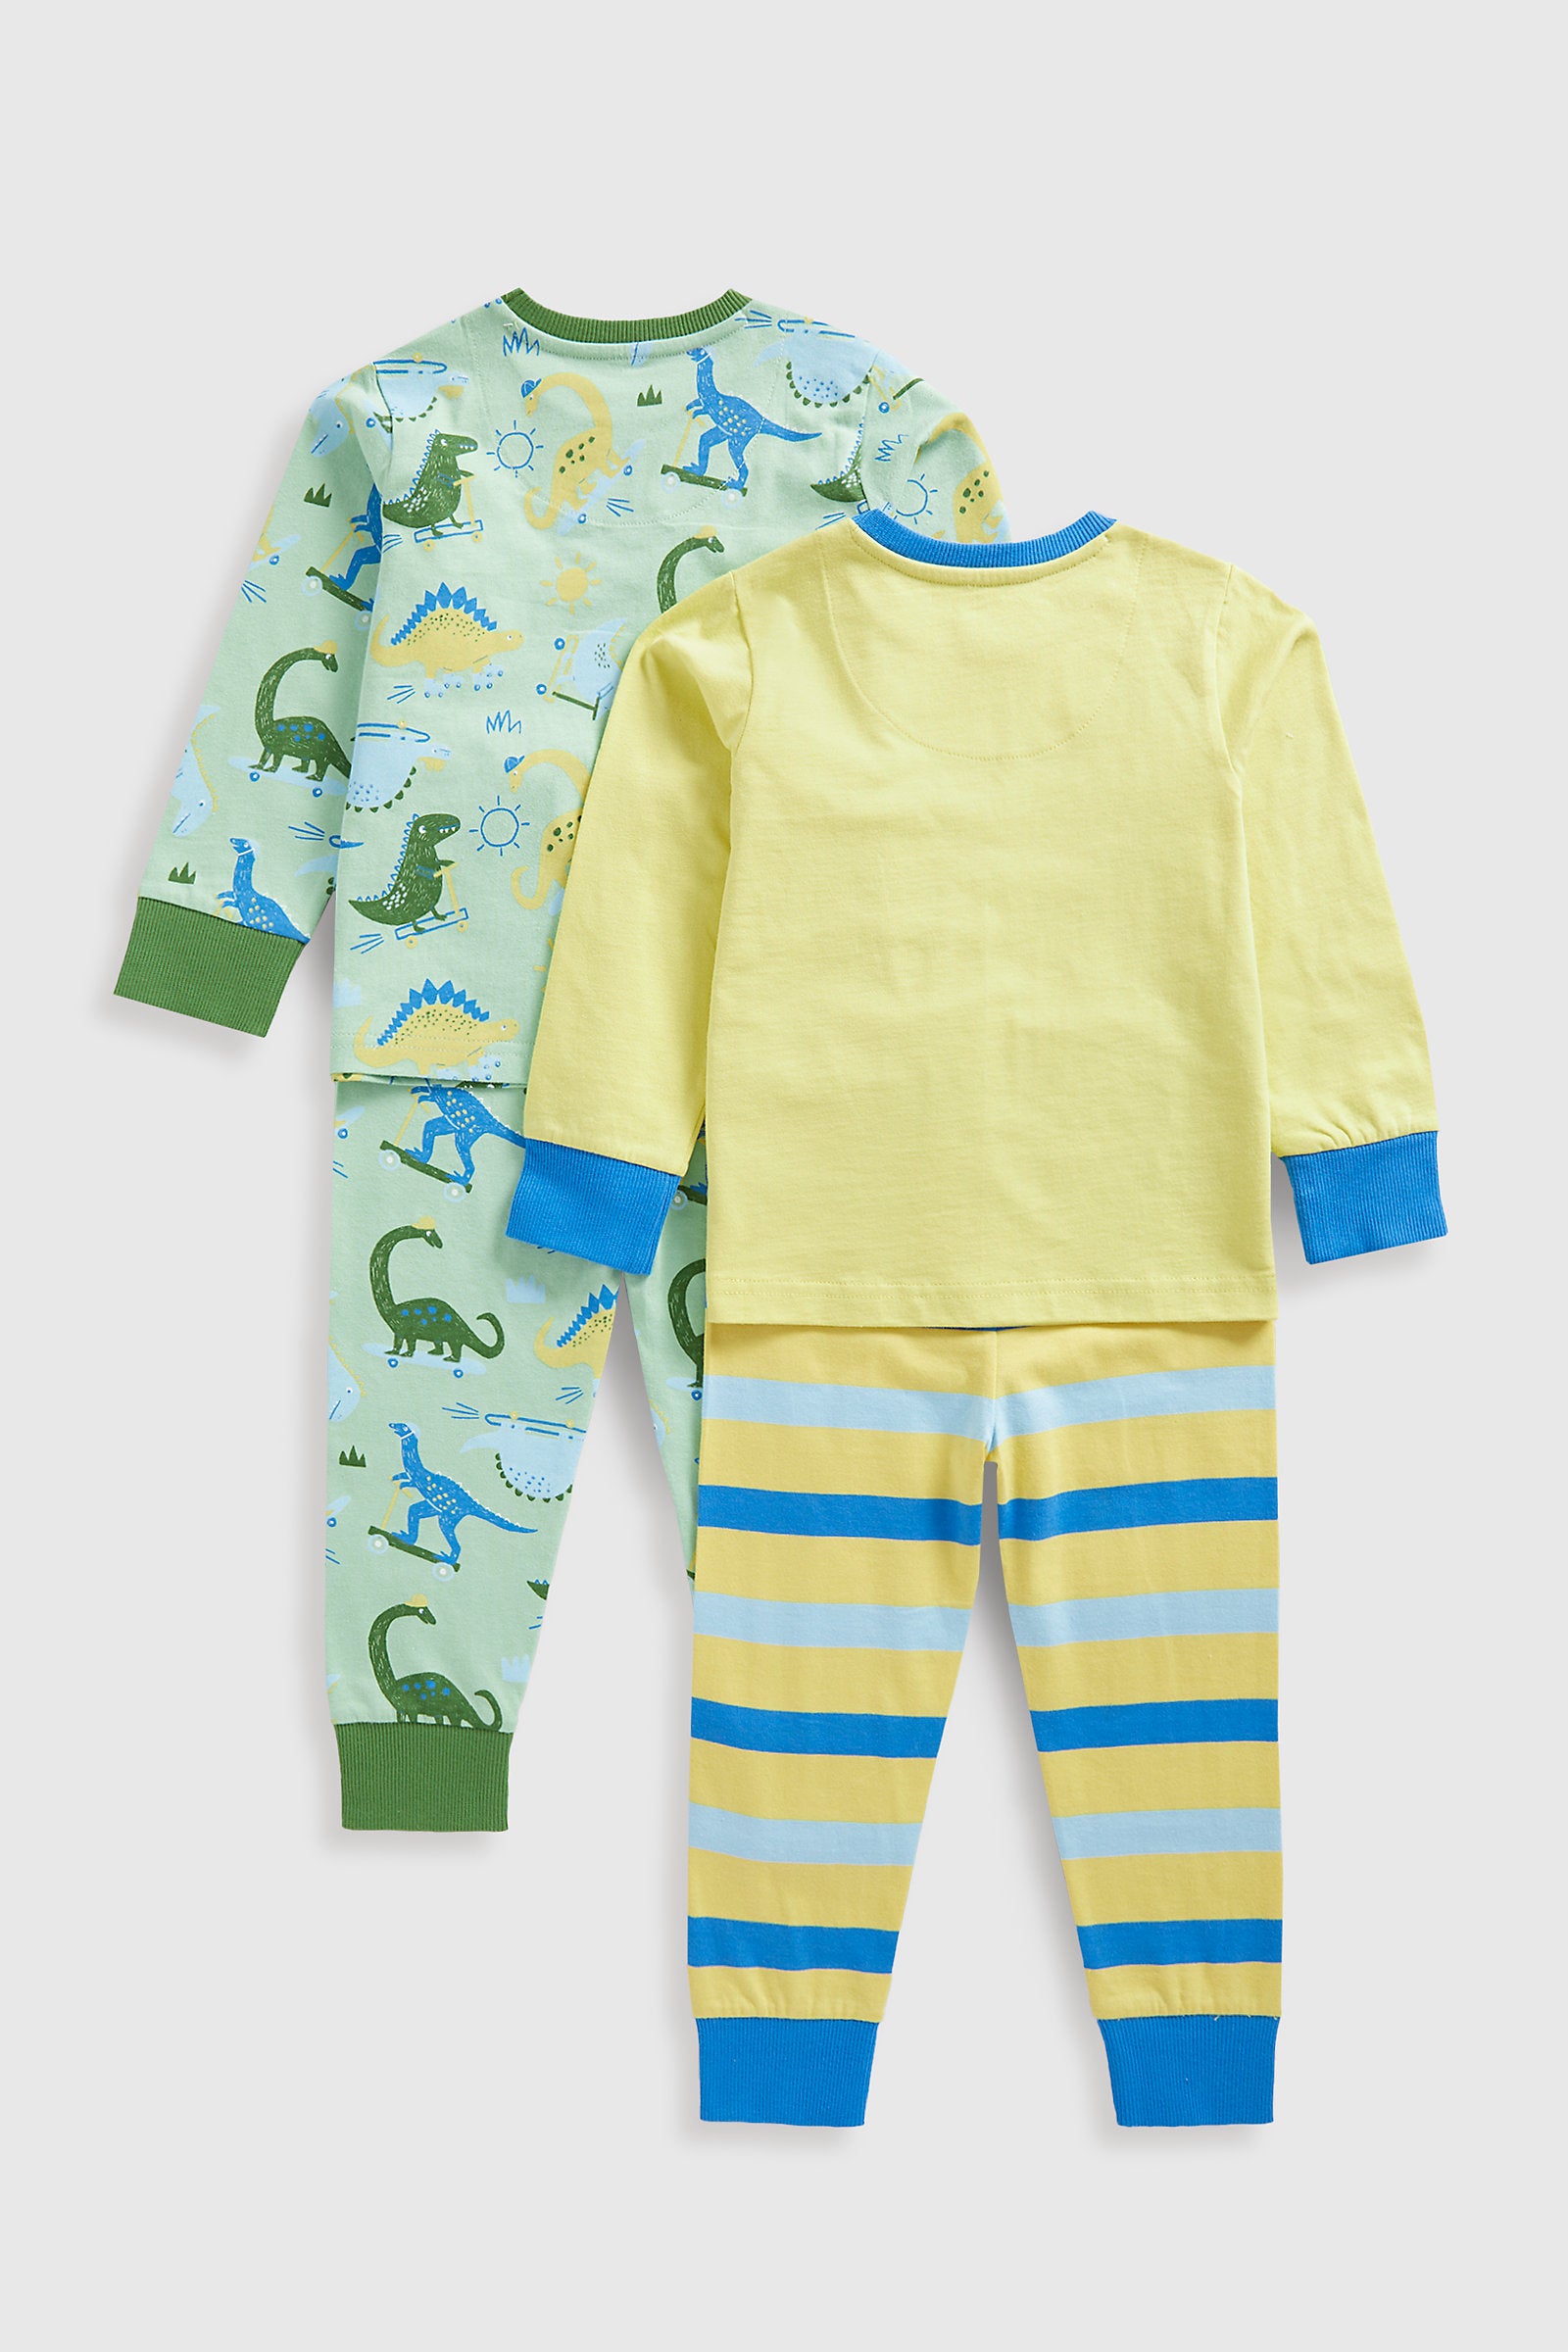 Mothercare Rocket Pyjamas - 2 Pack